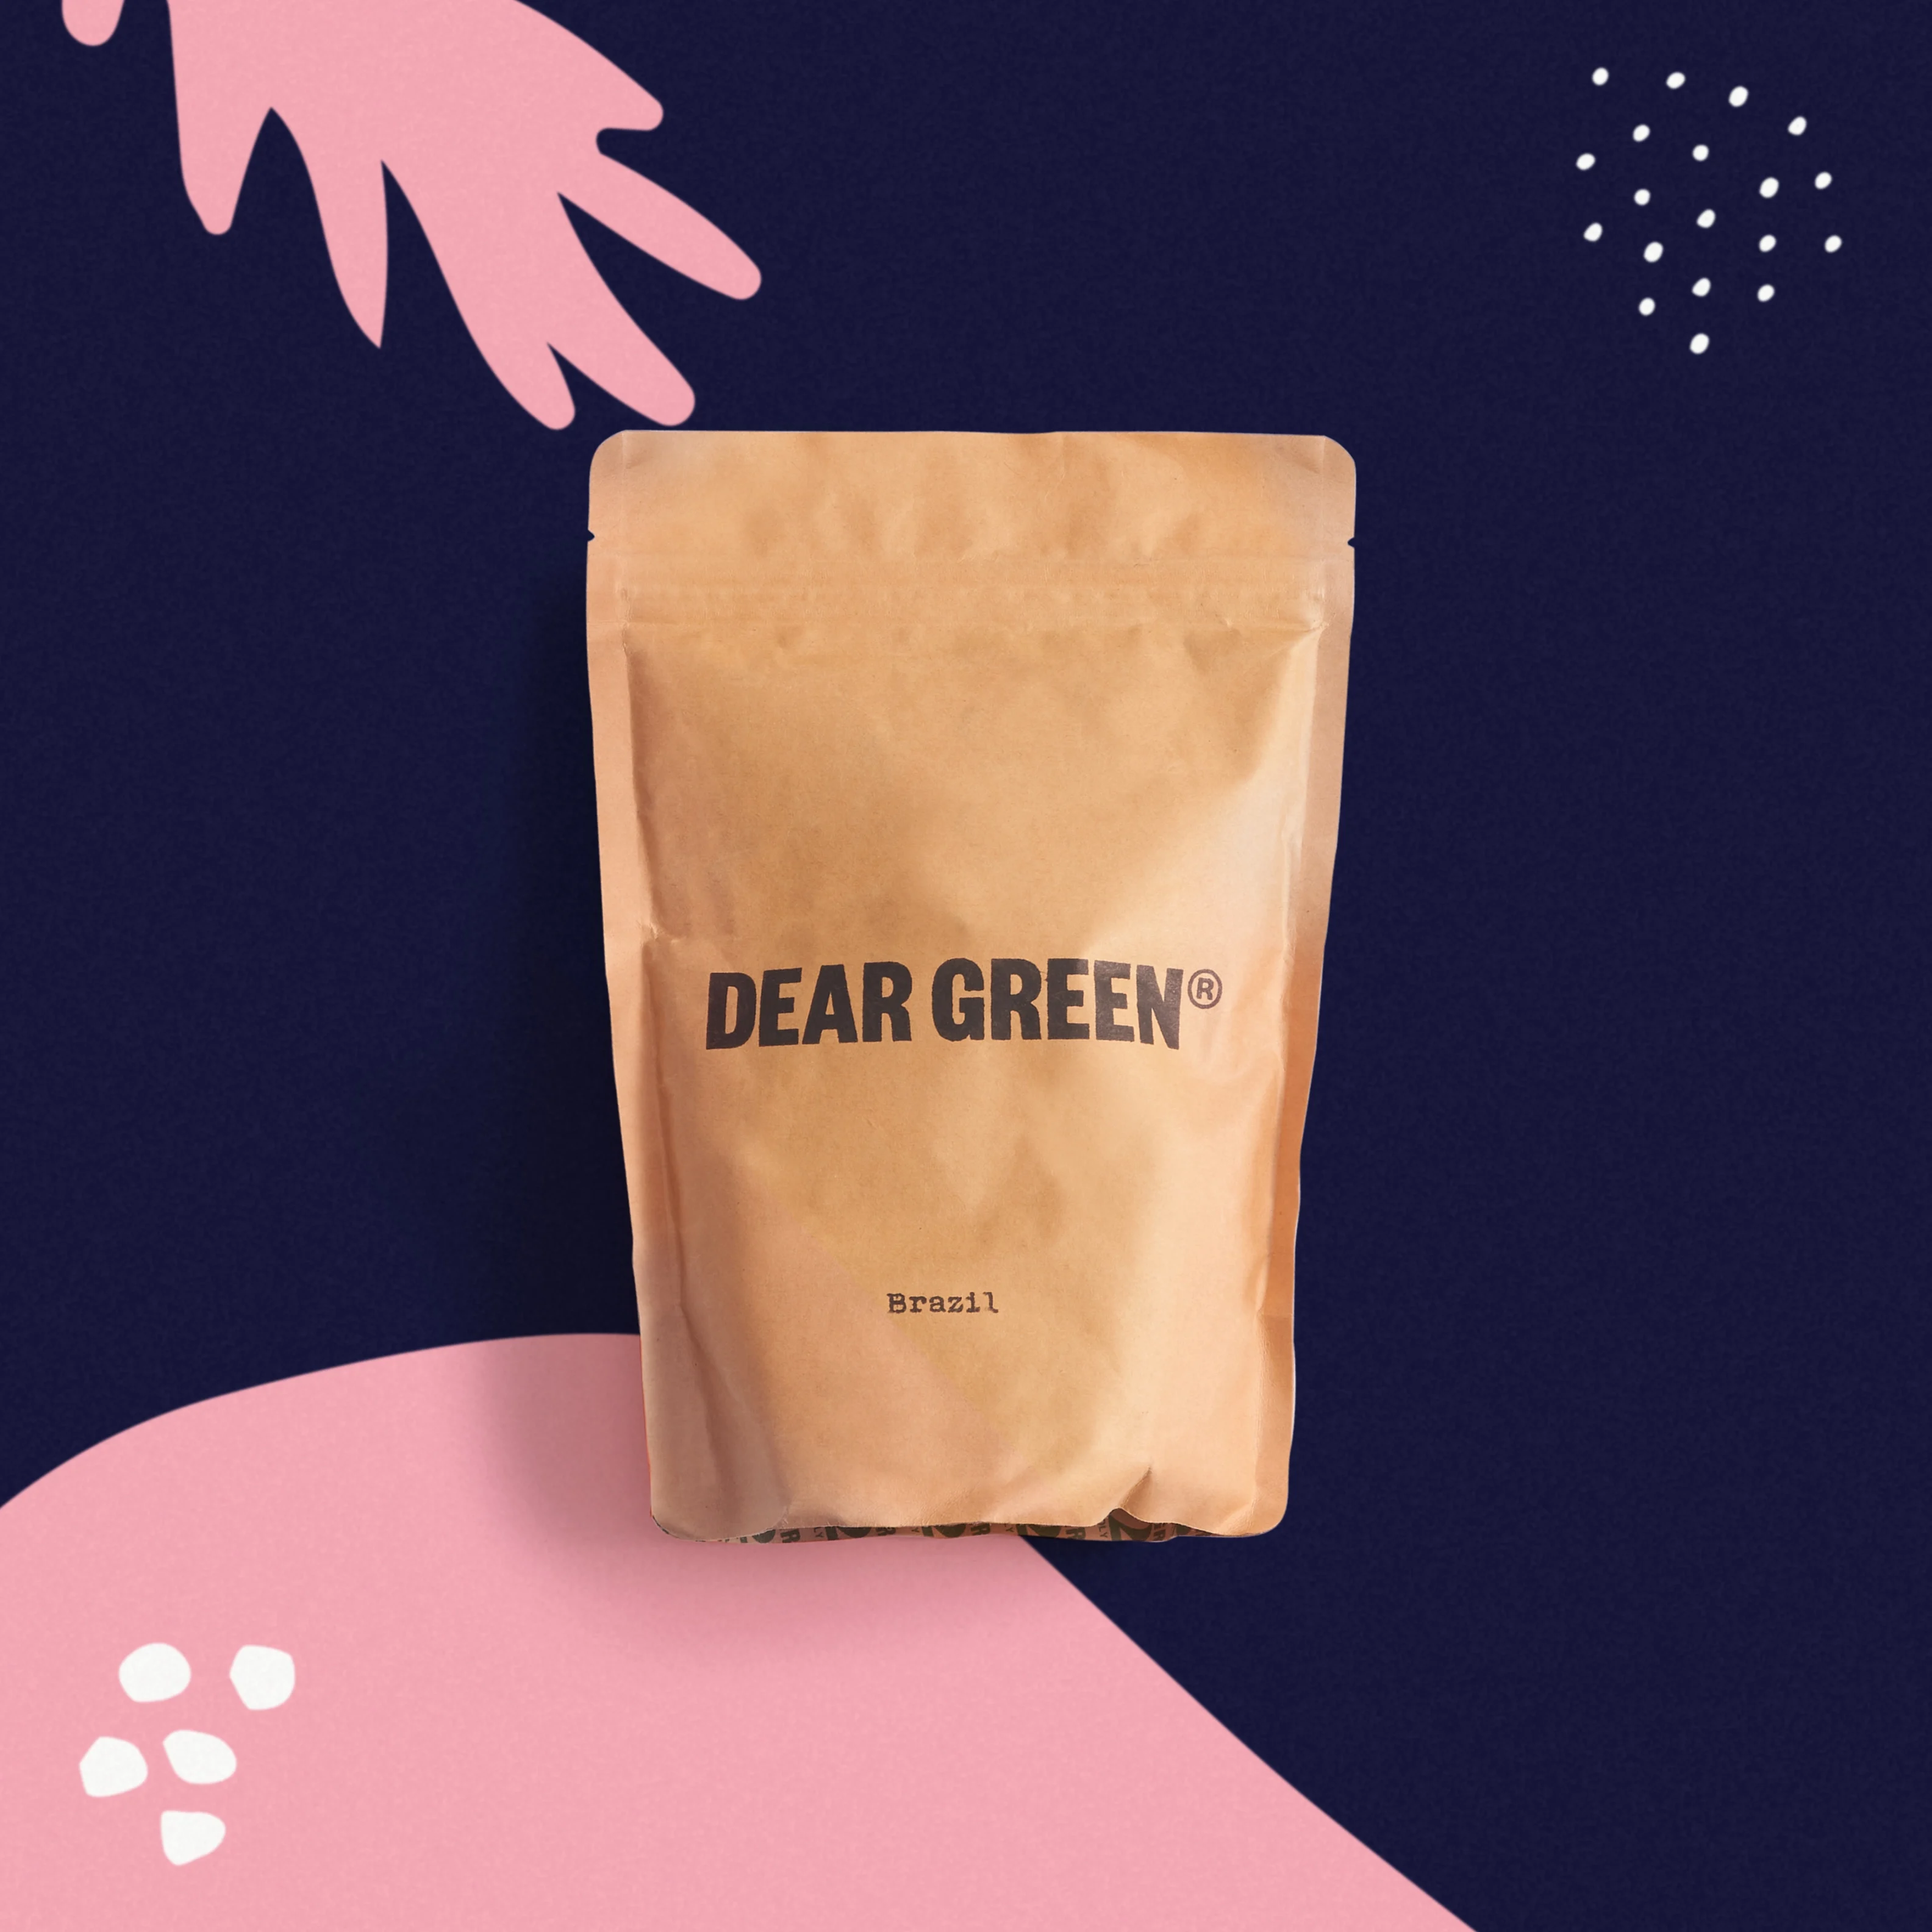 Ometria Go Swag Custom Branded Merchandise Welcome Pack Onboarding Dear Green coffee